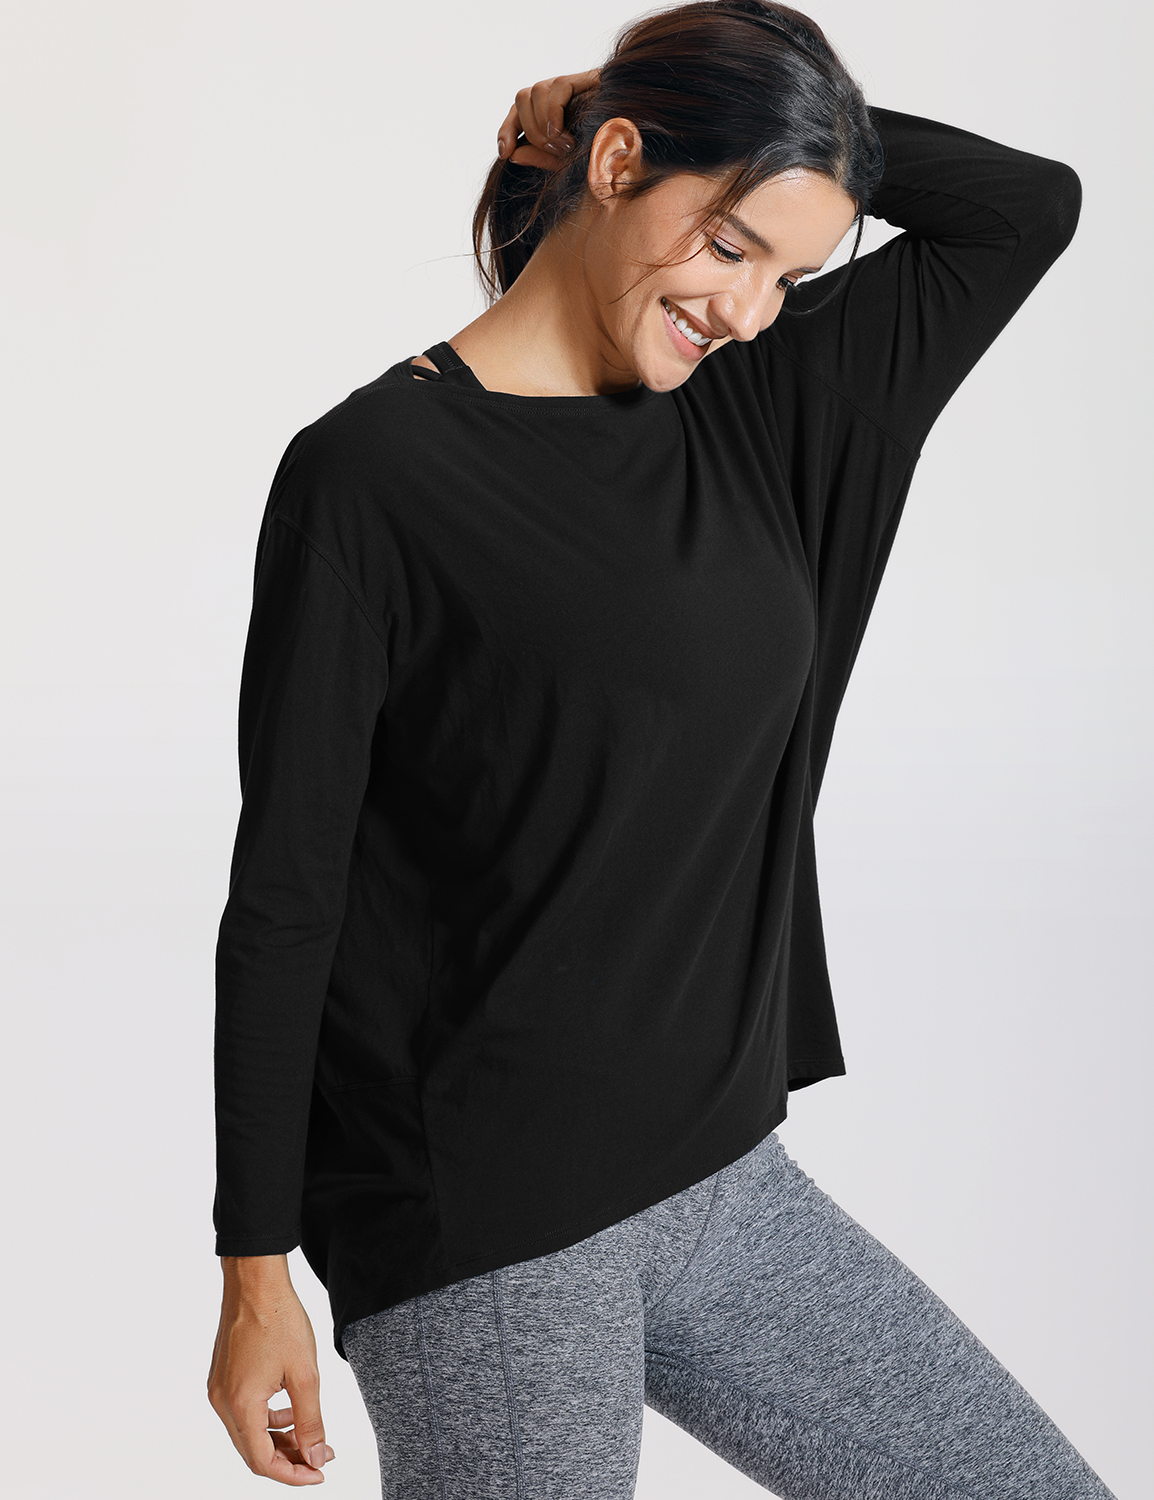 Muzniuer Long Sleeve Workout Tops for Women-Plain Long Sleeve